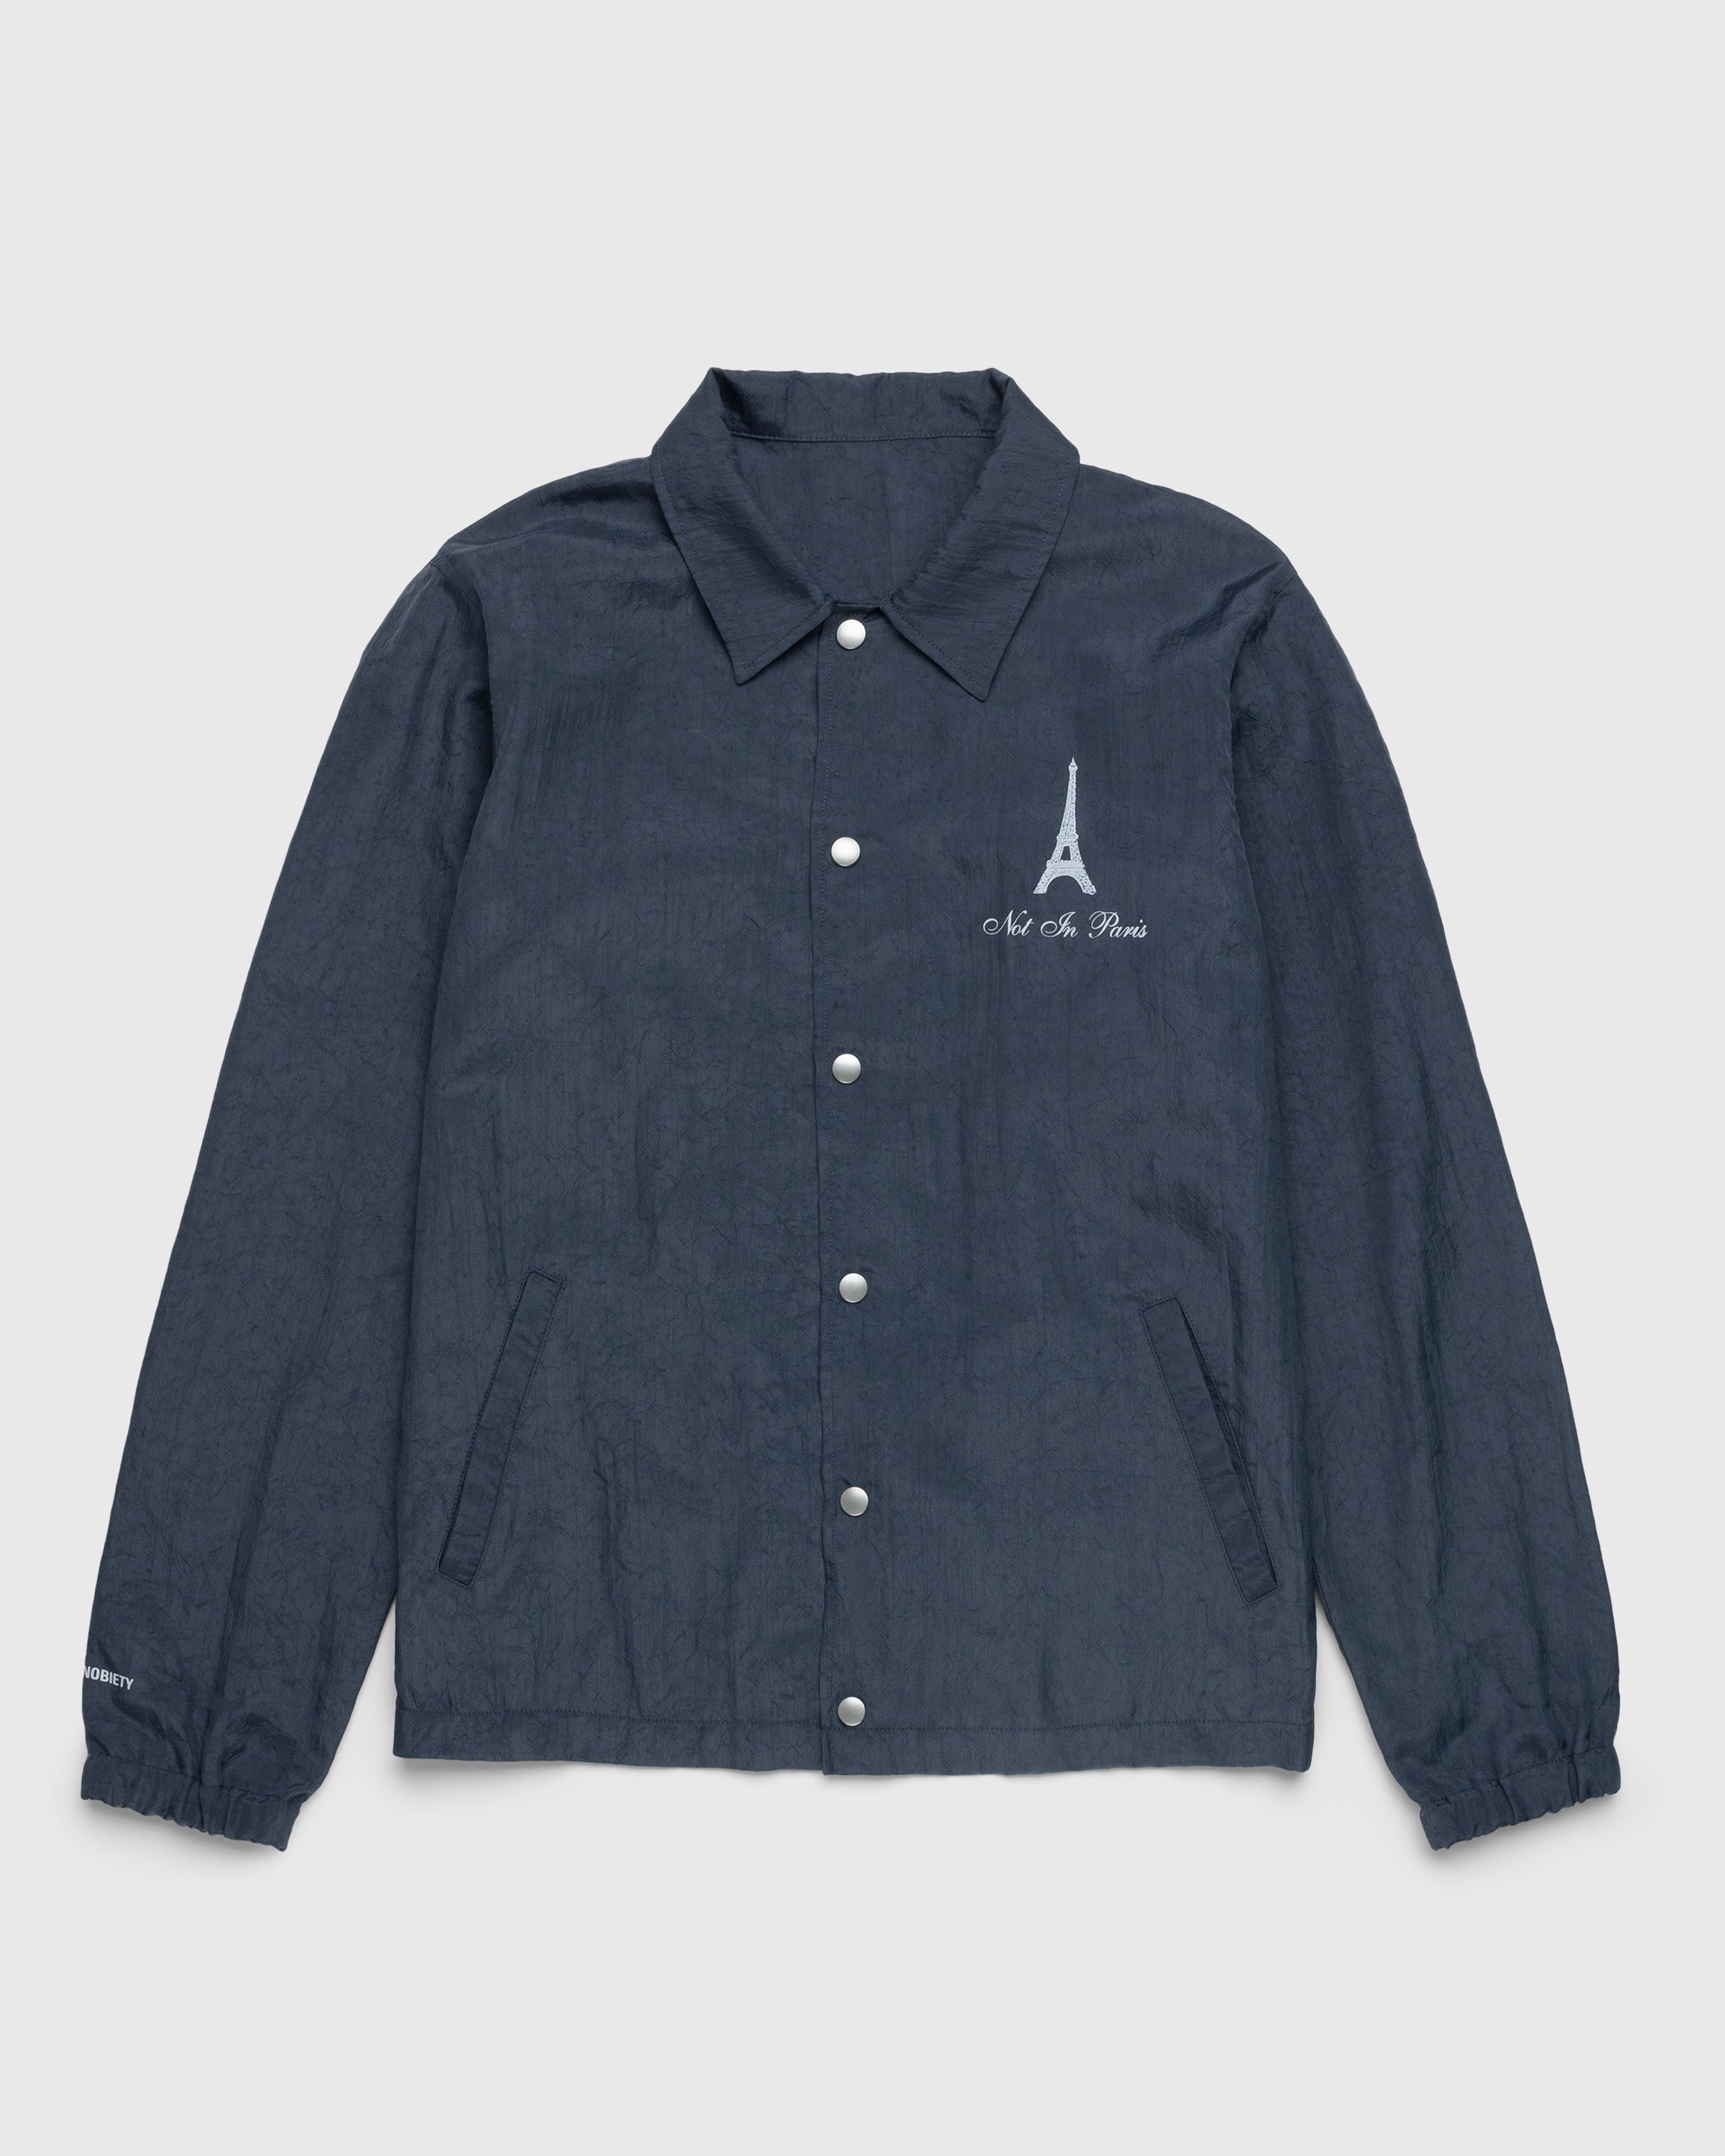 Highsnobiety – Not in Paris 5 Coach Jacket - Outerwear - Grey - Image 1